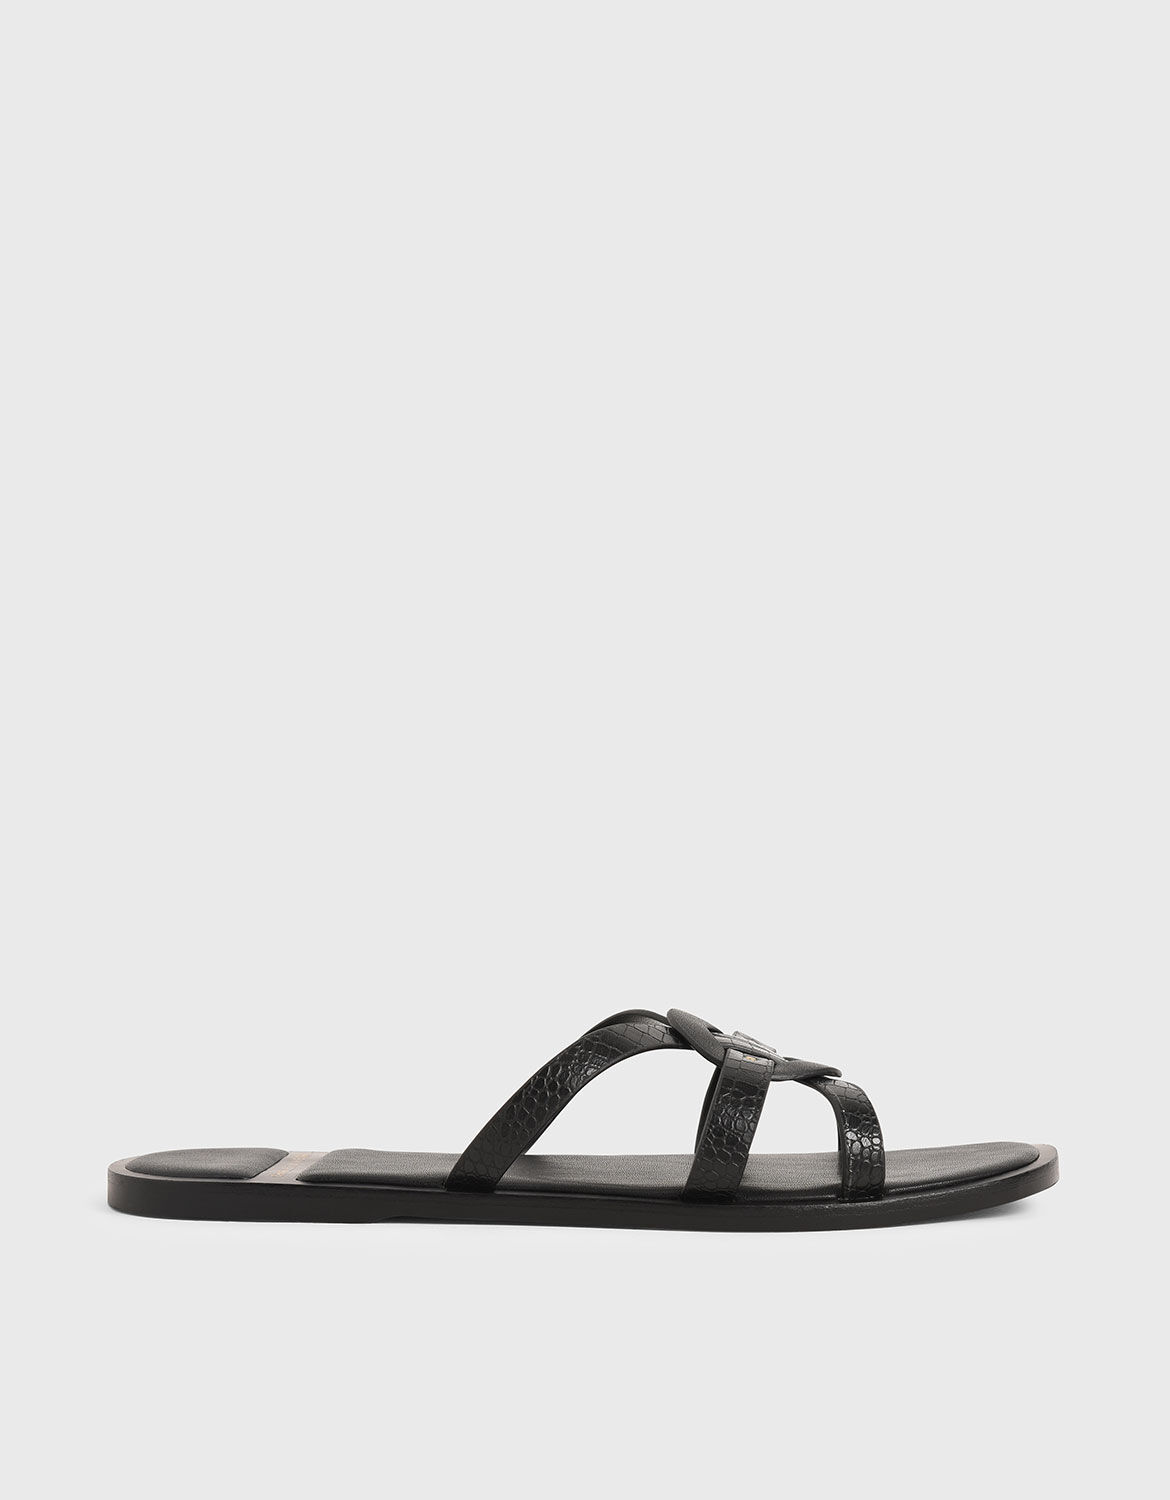 black and white animal print sandals